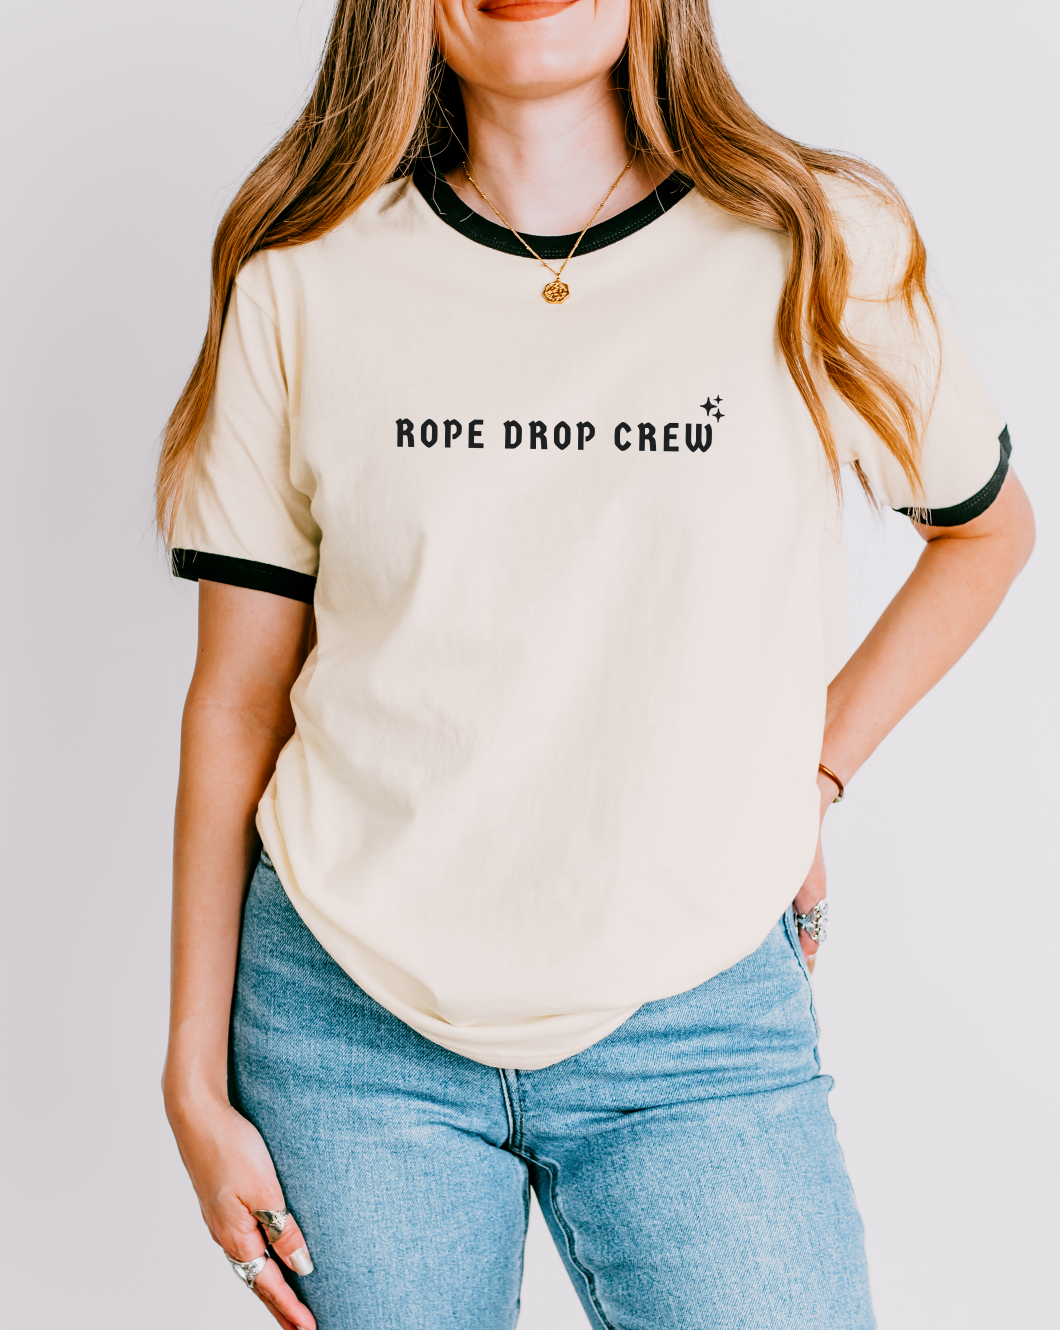 Rope Drop Crew Next Level Unisex Cotton Ringer T-Shirt